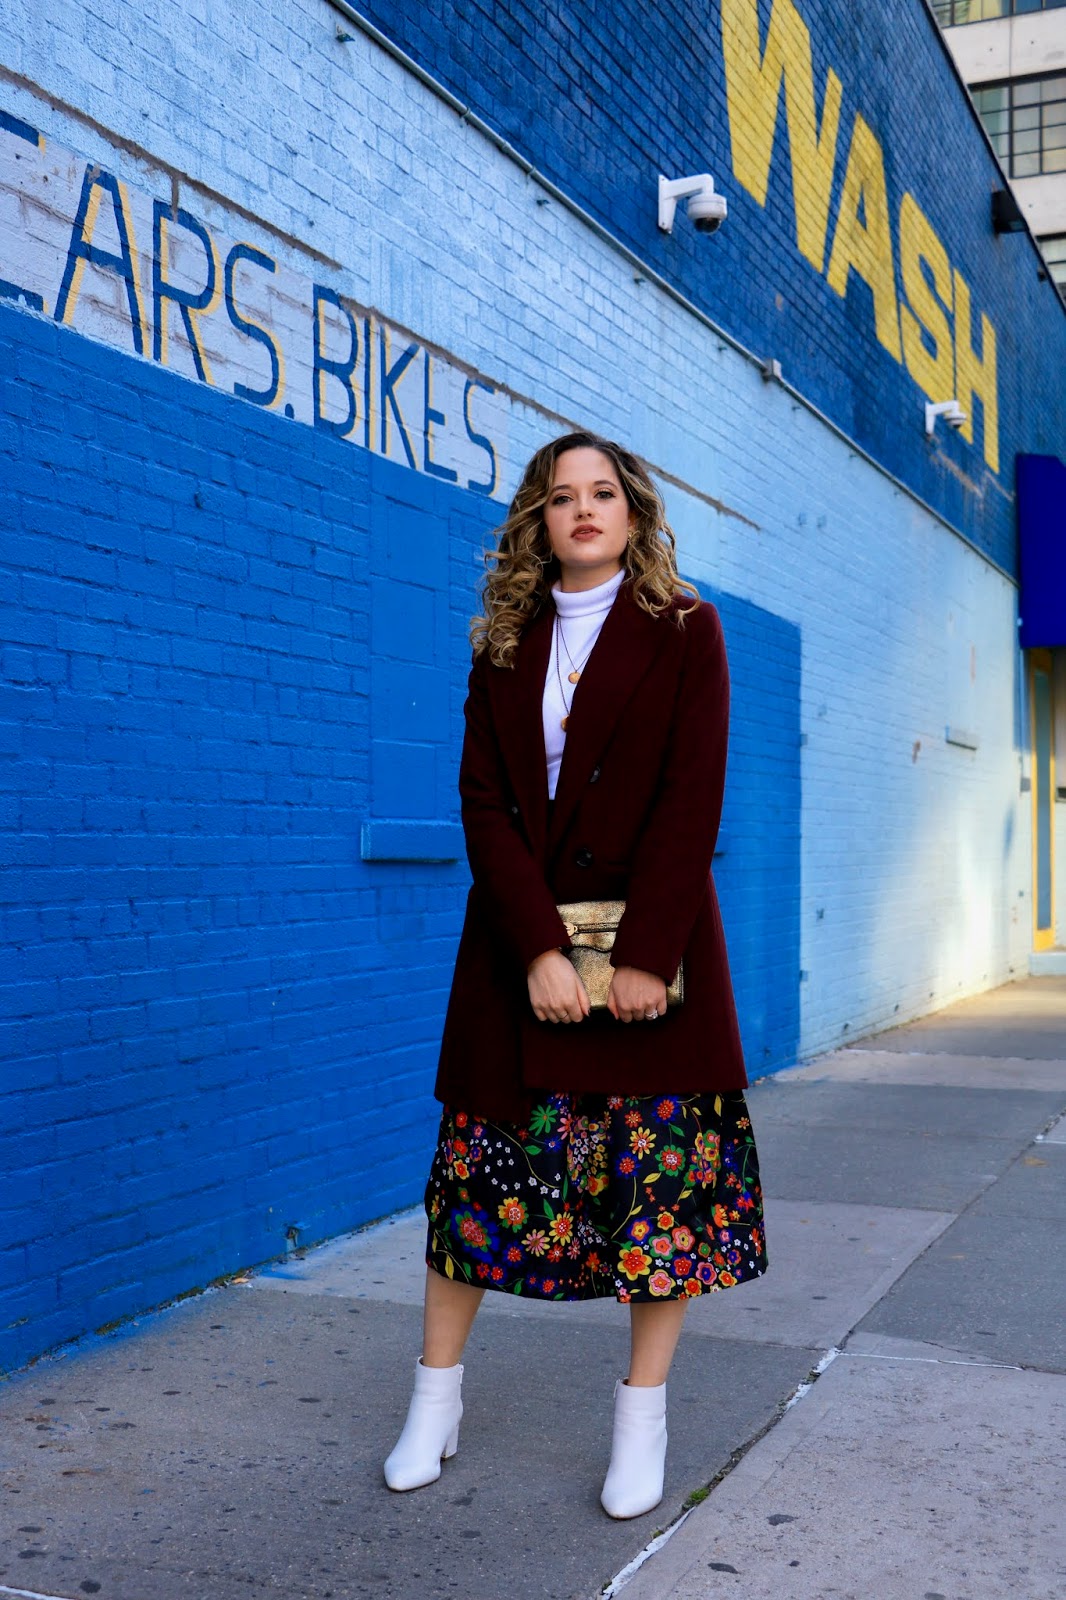 Nyc fashion blogger Kathleen Harper's Chelsea photo shoot.